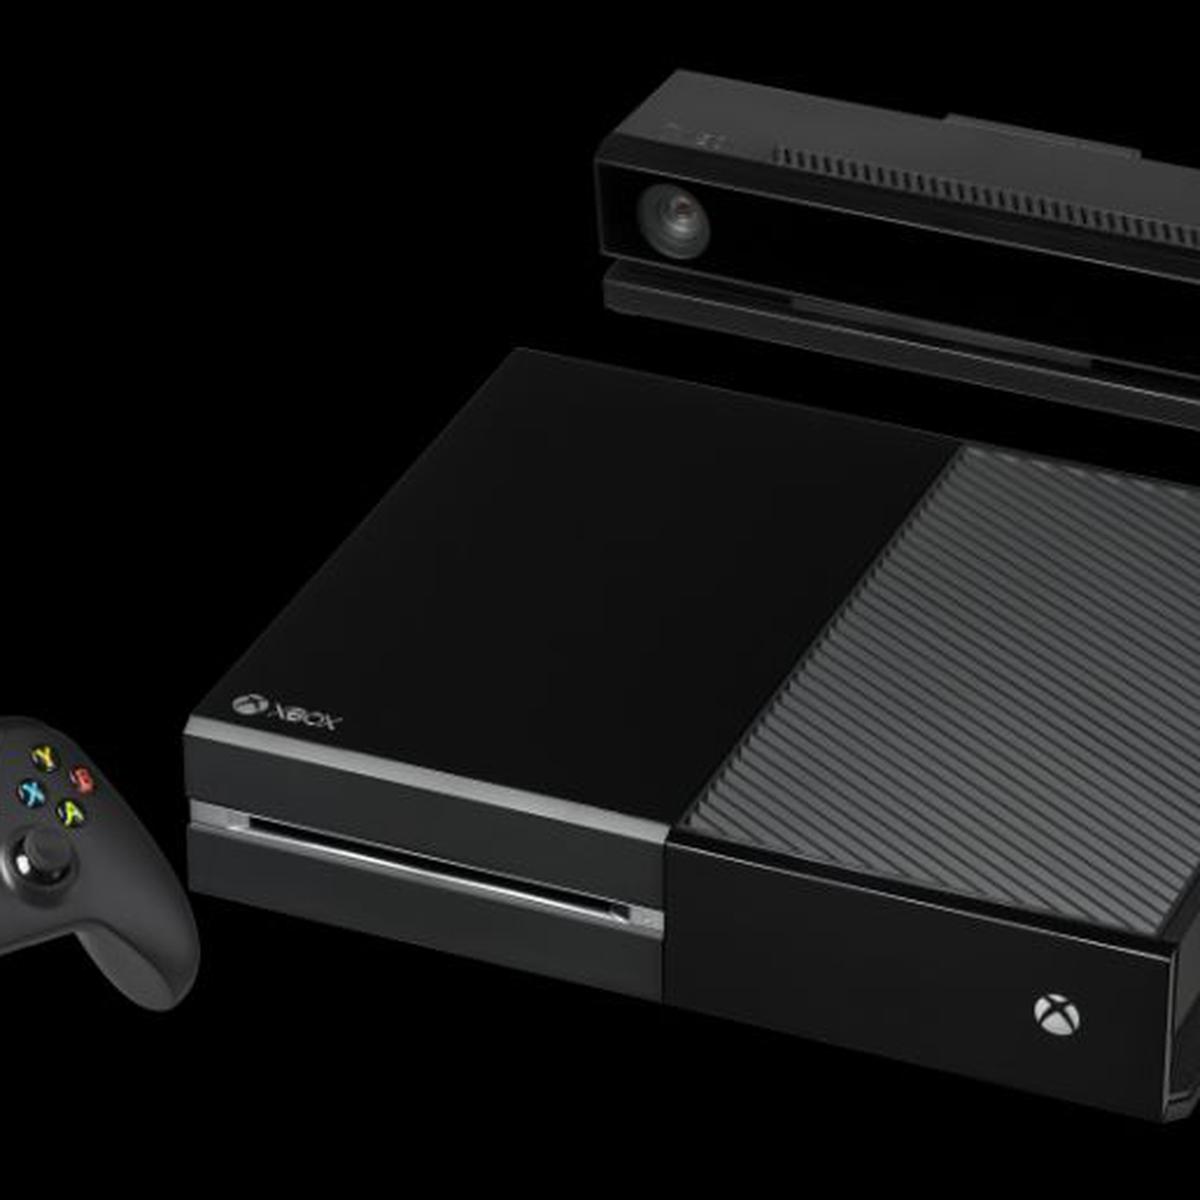 Microsoft dejó de fabricar consolas Xbox One a finales de 2020